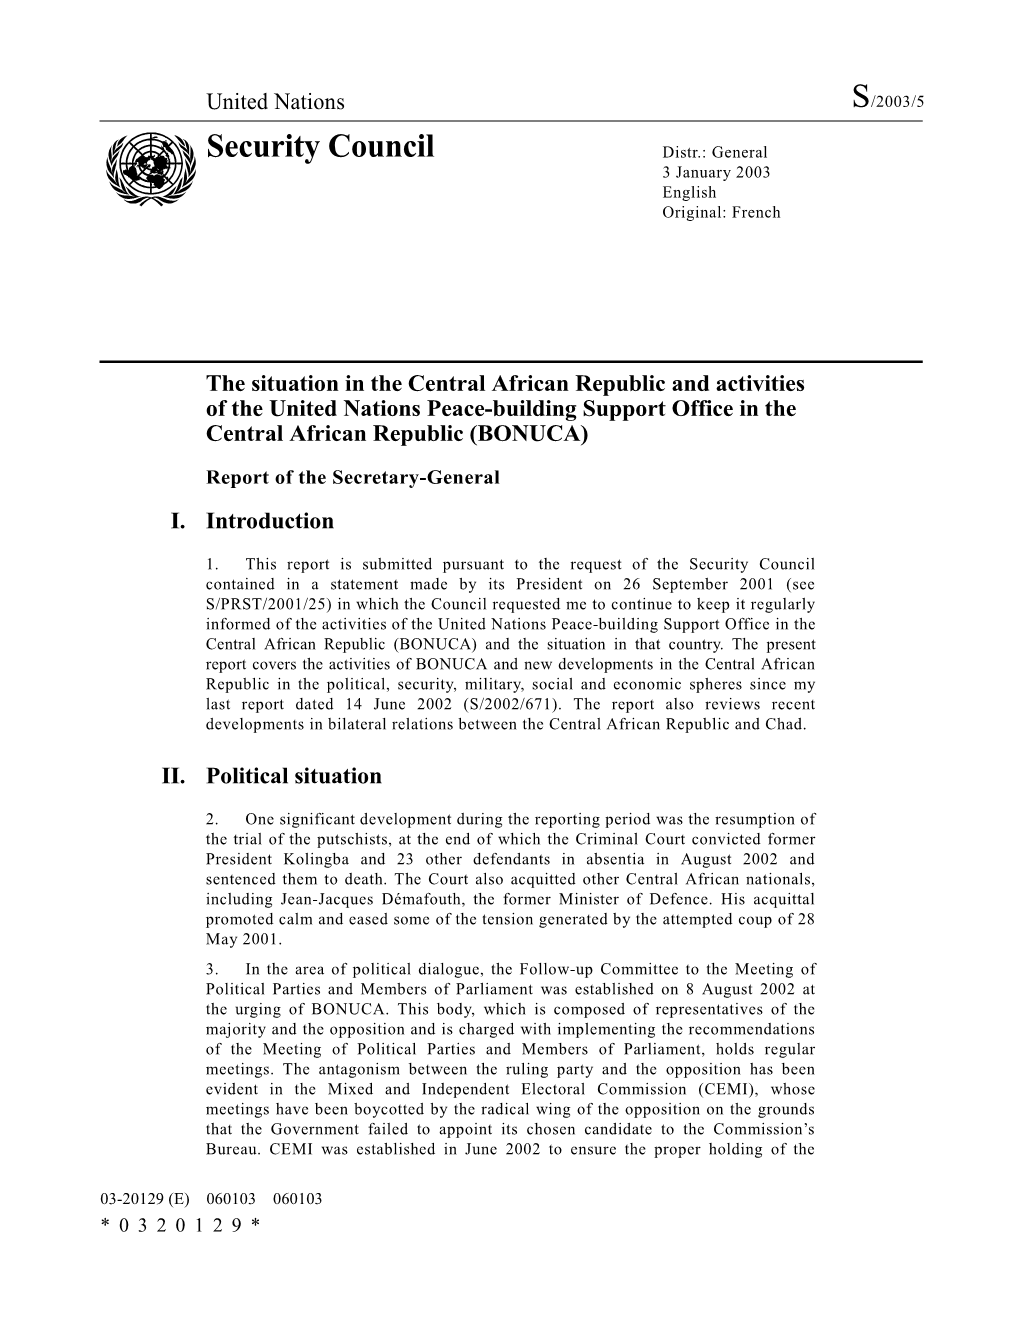 Security Council Distr.: General 3 January 2003 English